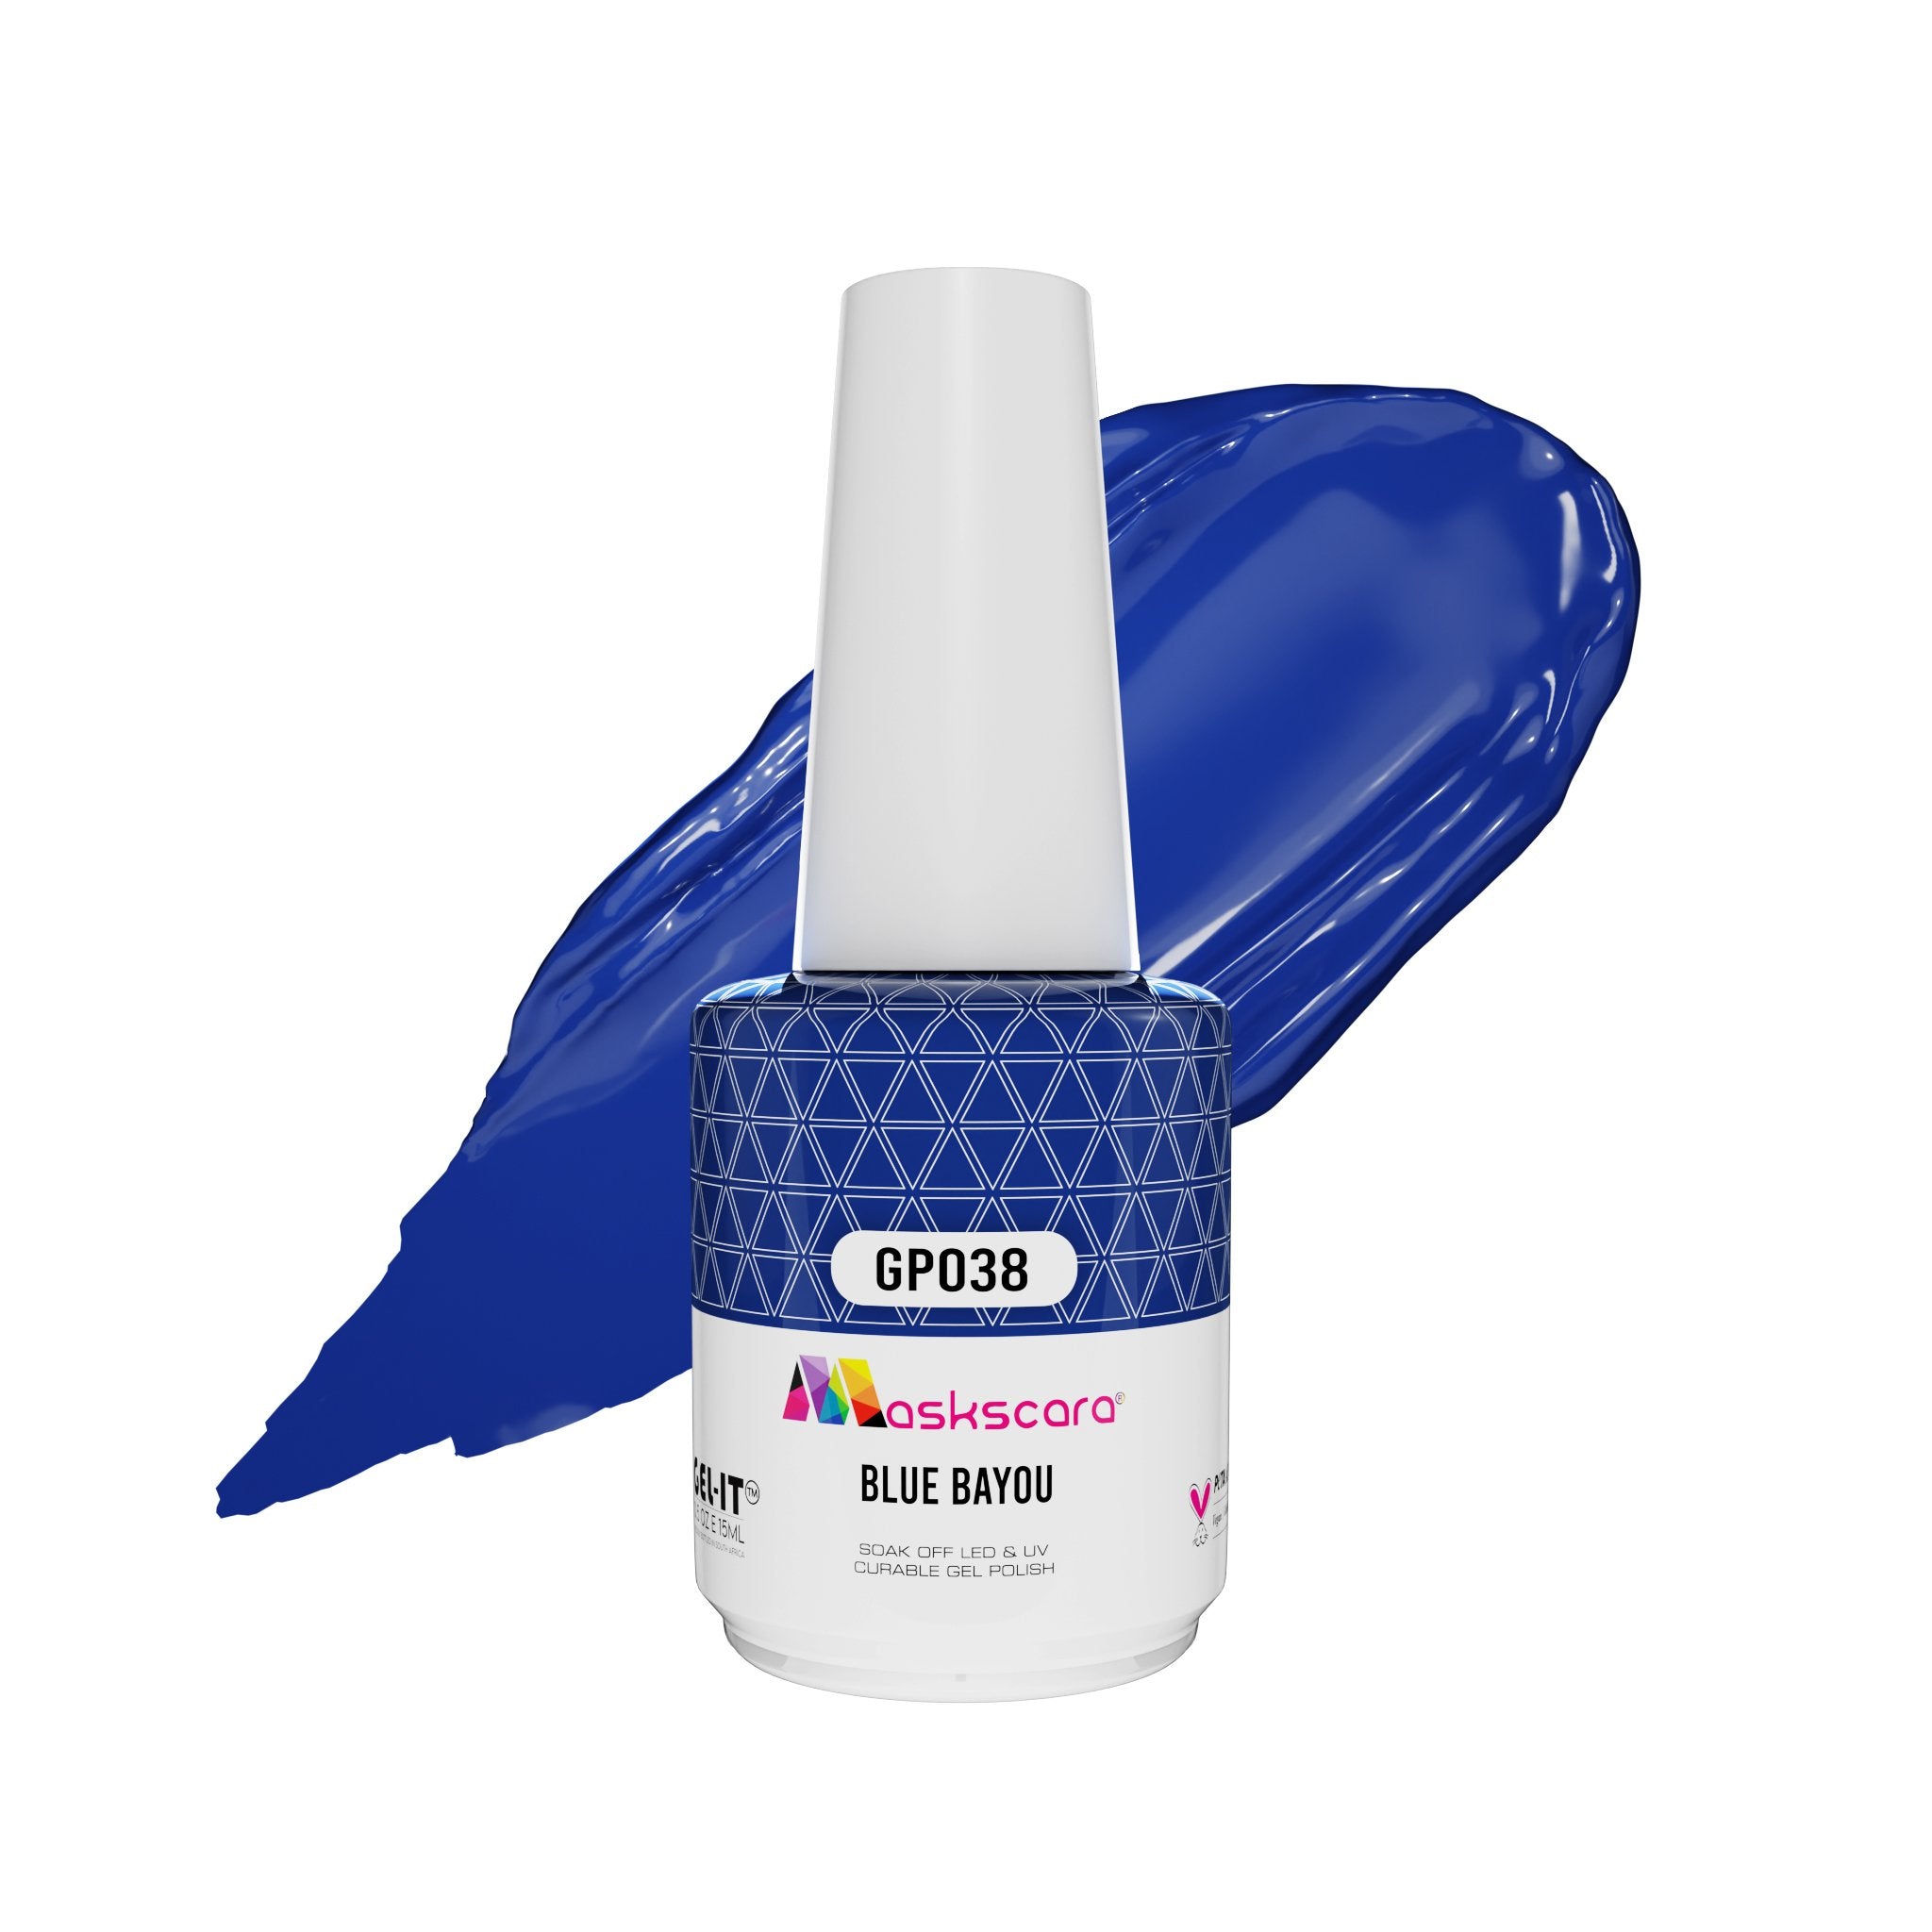 <img scr = “ GP038 Blue Bayou.jpeg” alt = “Deep Blue gel polish colour by the brand Maskscara”>